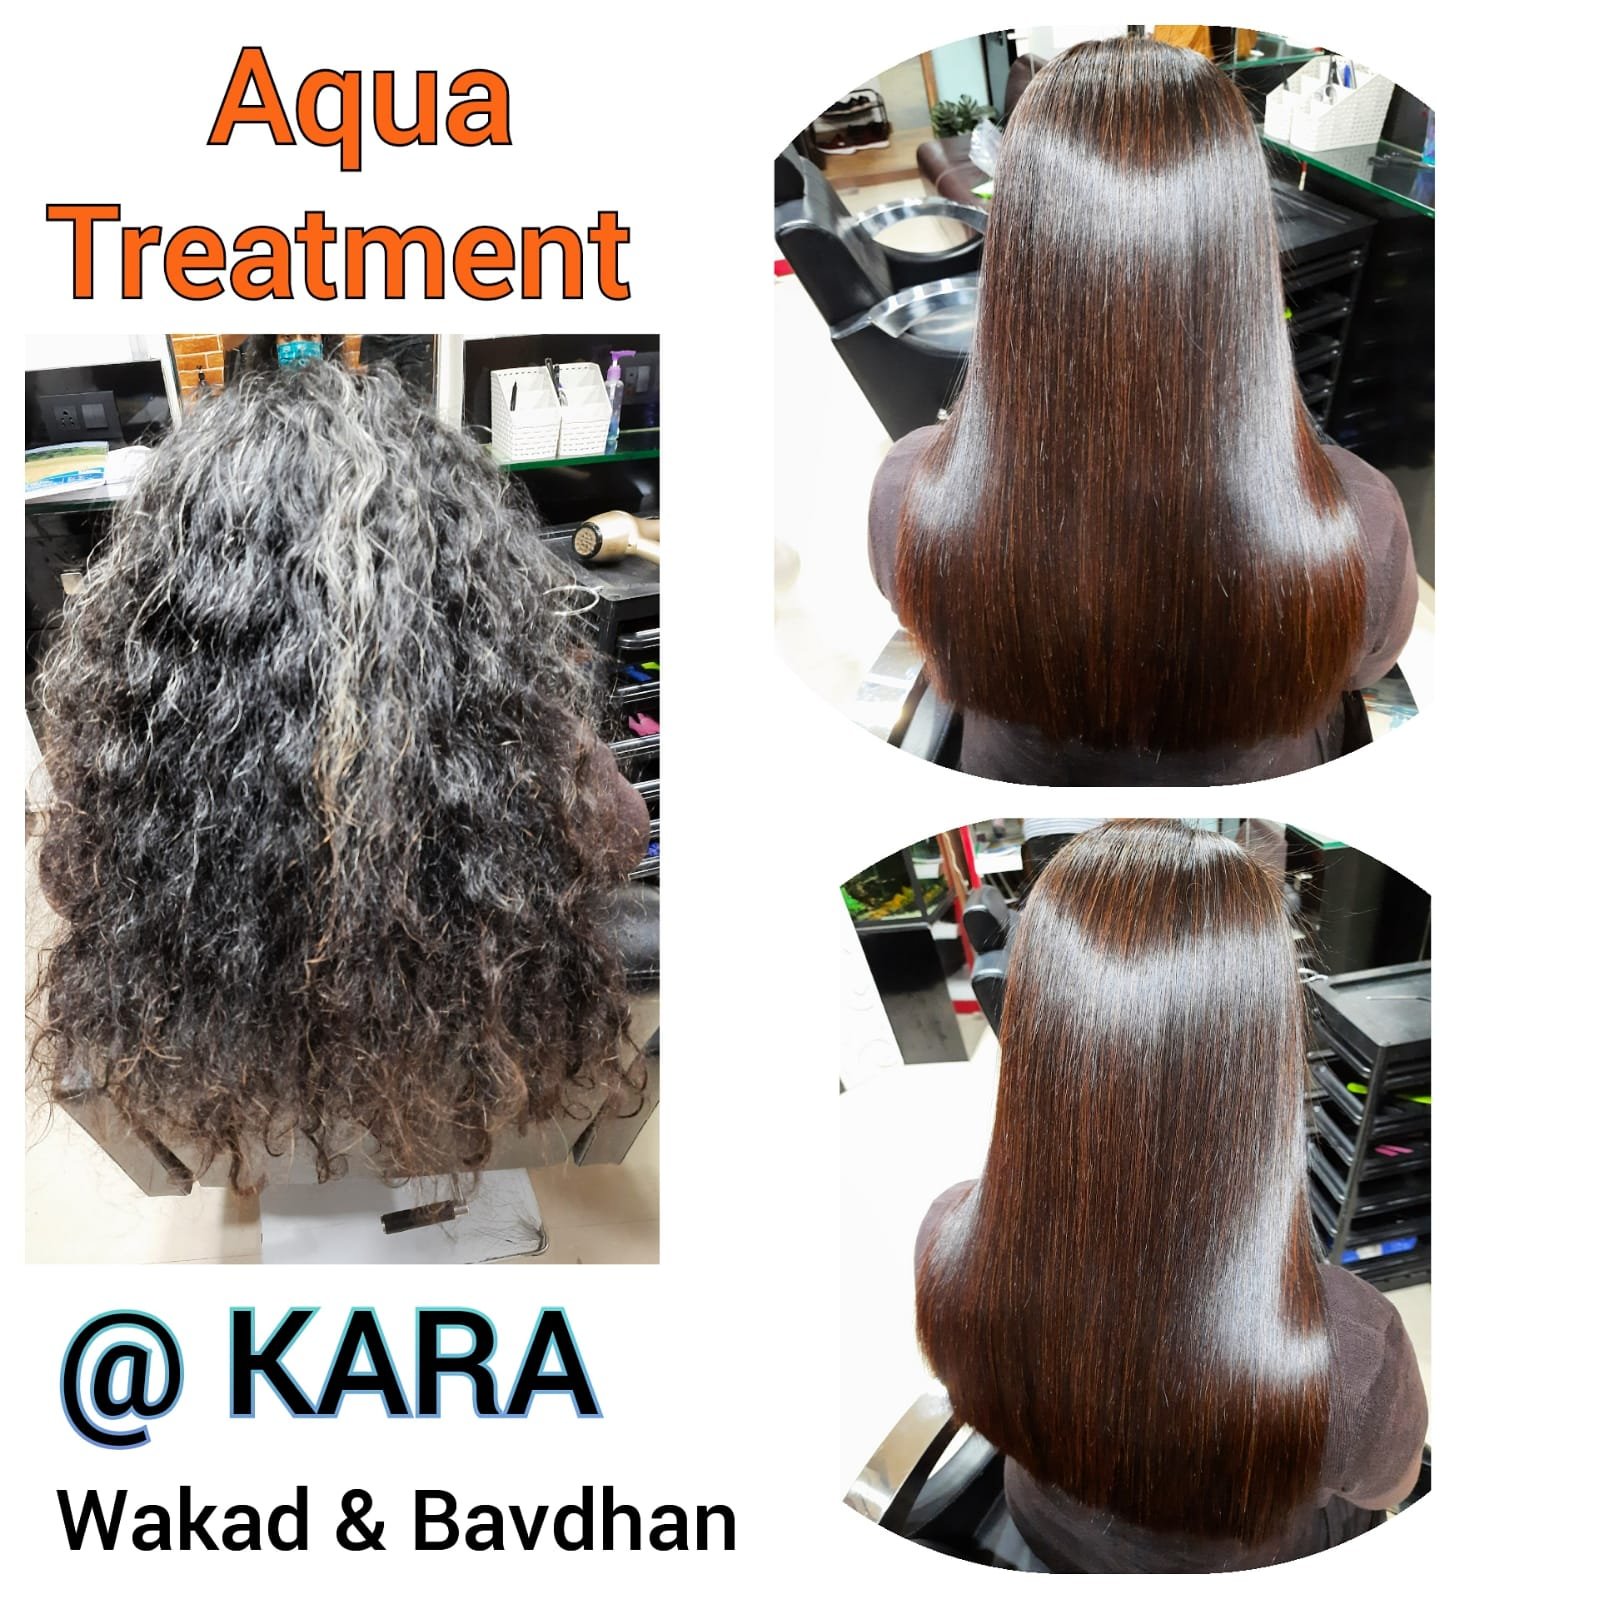 Royal Treatment Aqua Charge Hair Conditioner 946ml price in UAE  Noon UAE   kanbkam